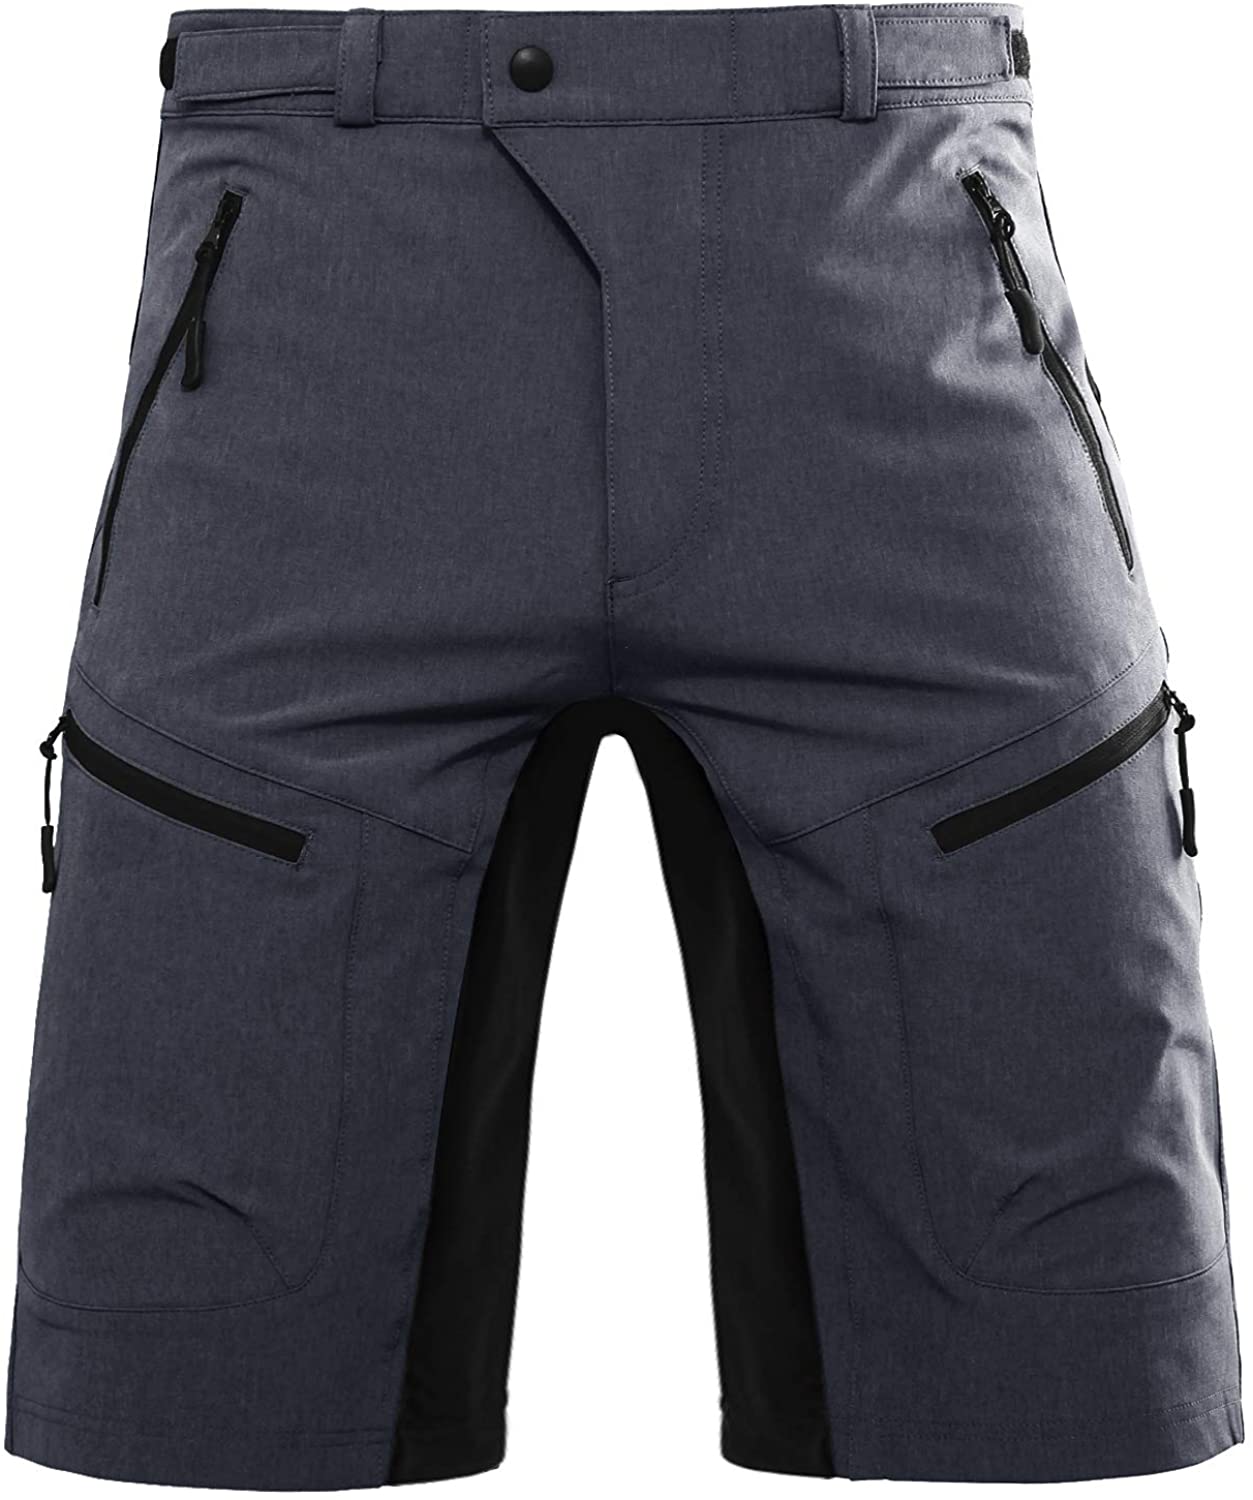 Hiauspor Mens Mountain Bike Shorts Stretch MTB Shorts Quick Dry with Zipper Pockets